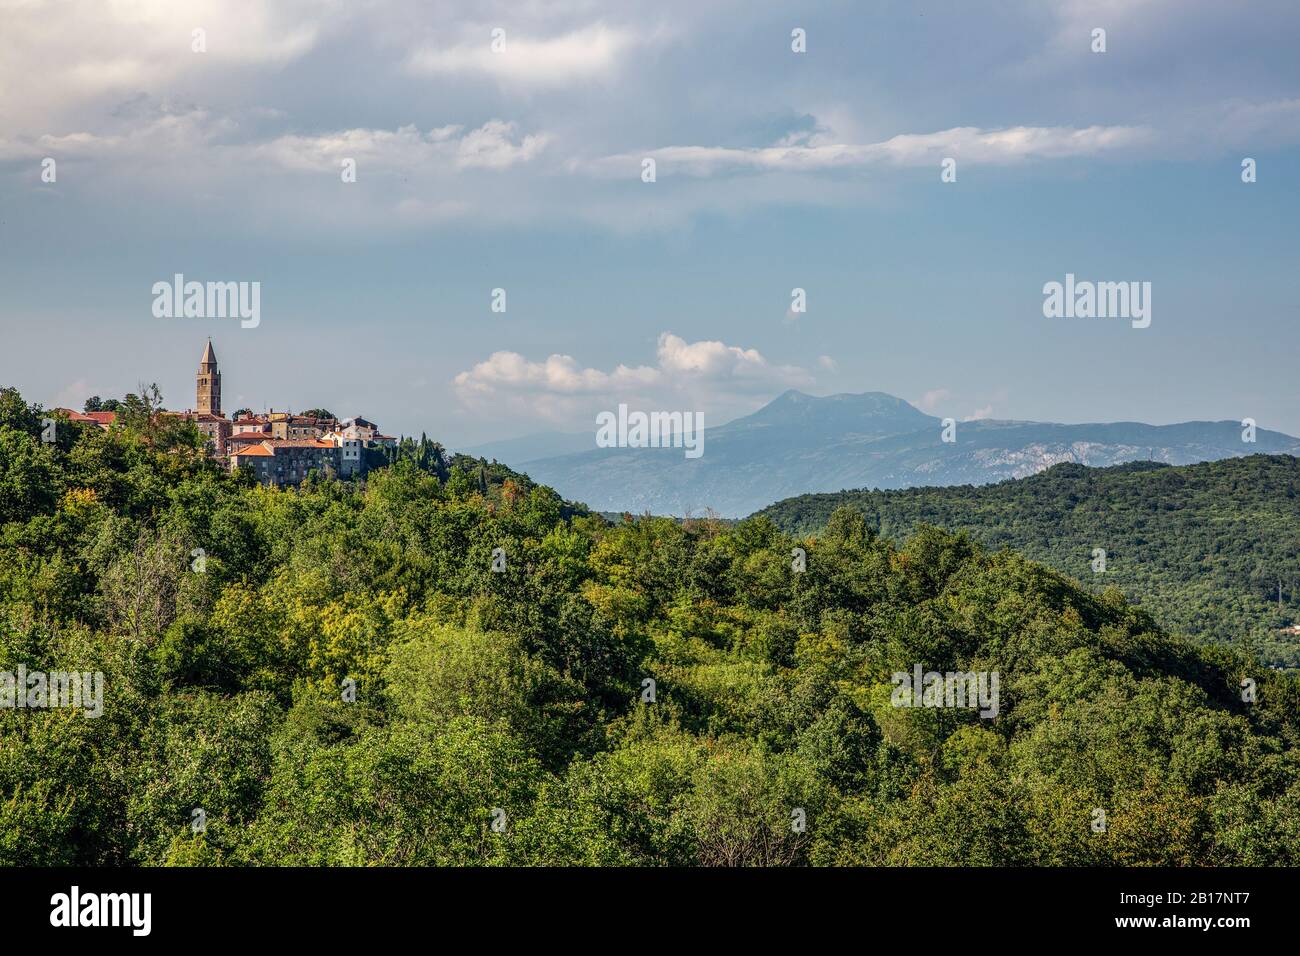 Croatia, Istria, Labin, View of town and green hills Stock Photo